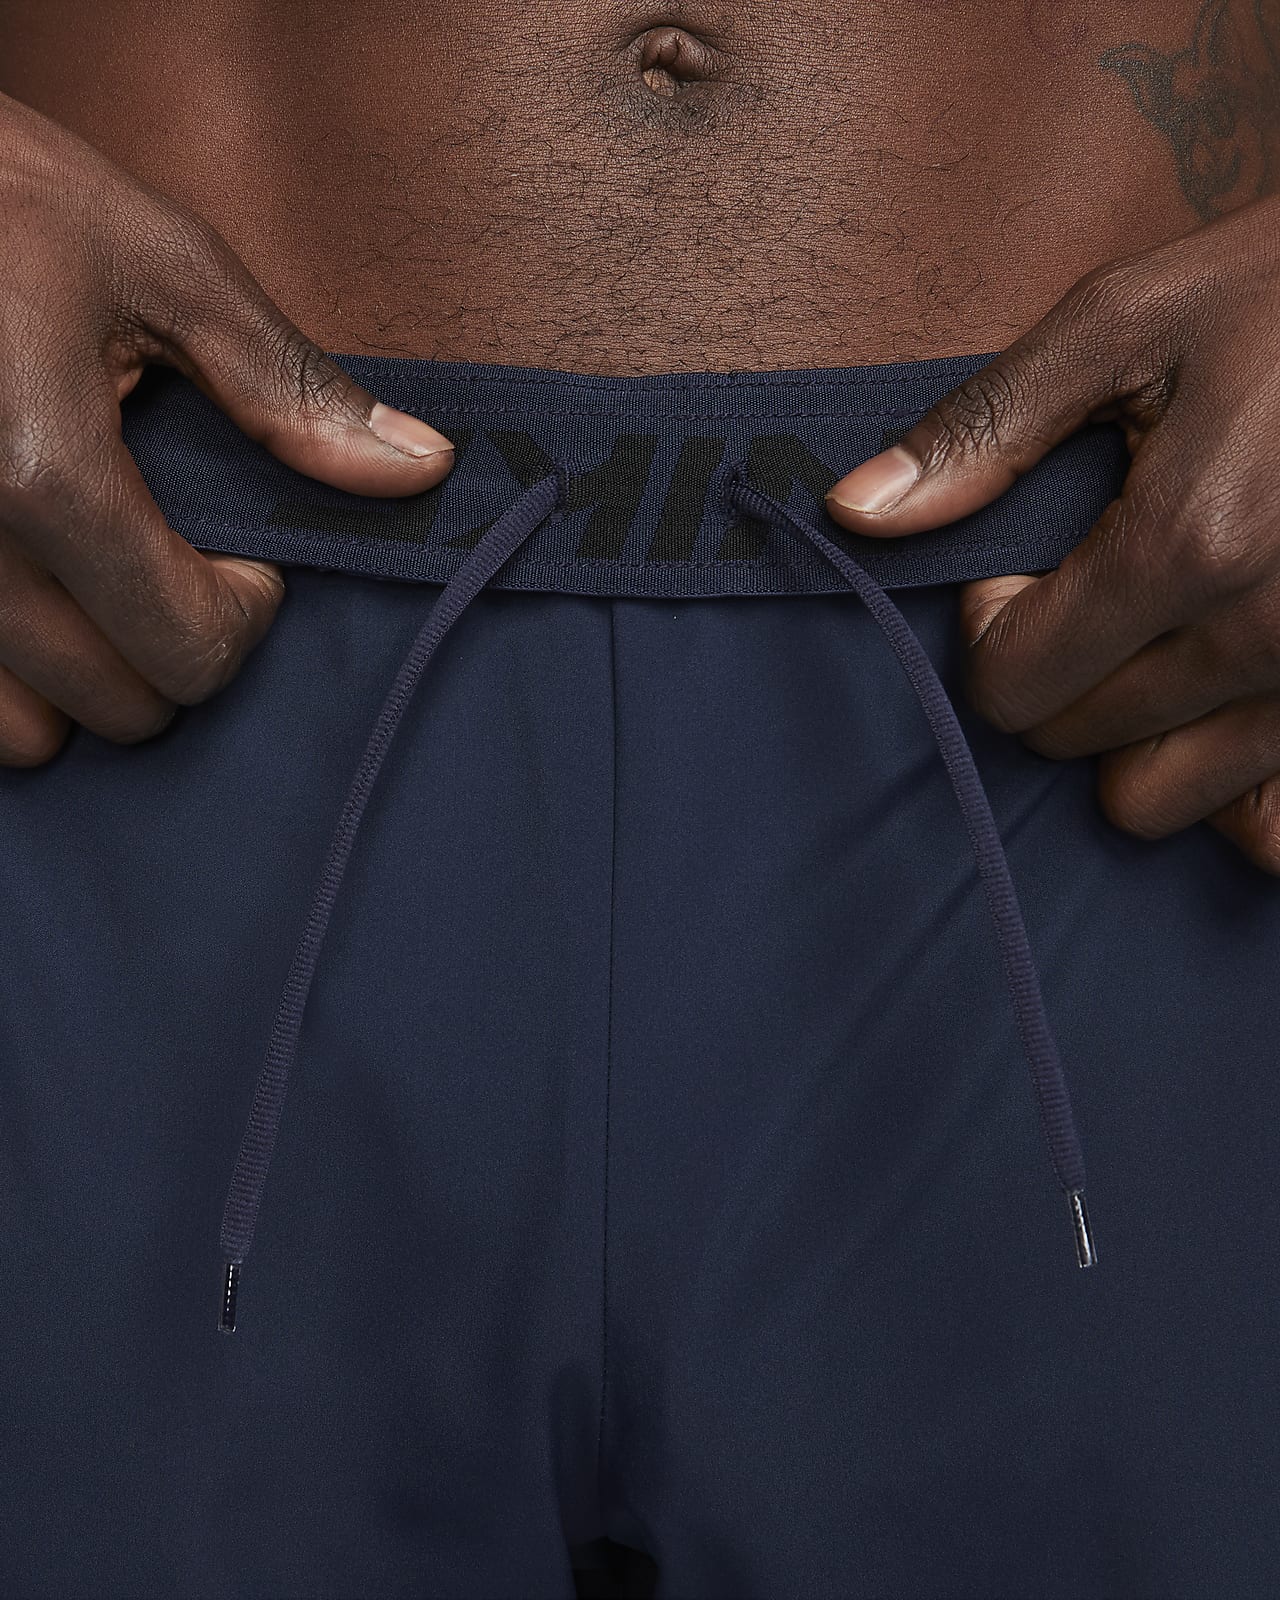 Nike Men's Flex Woven Story PK Shorts